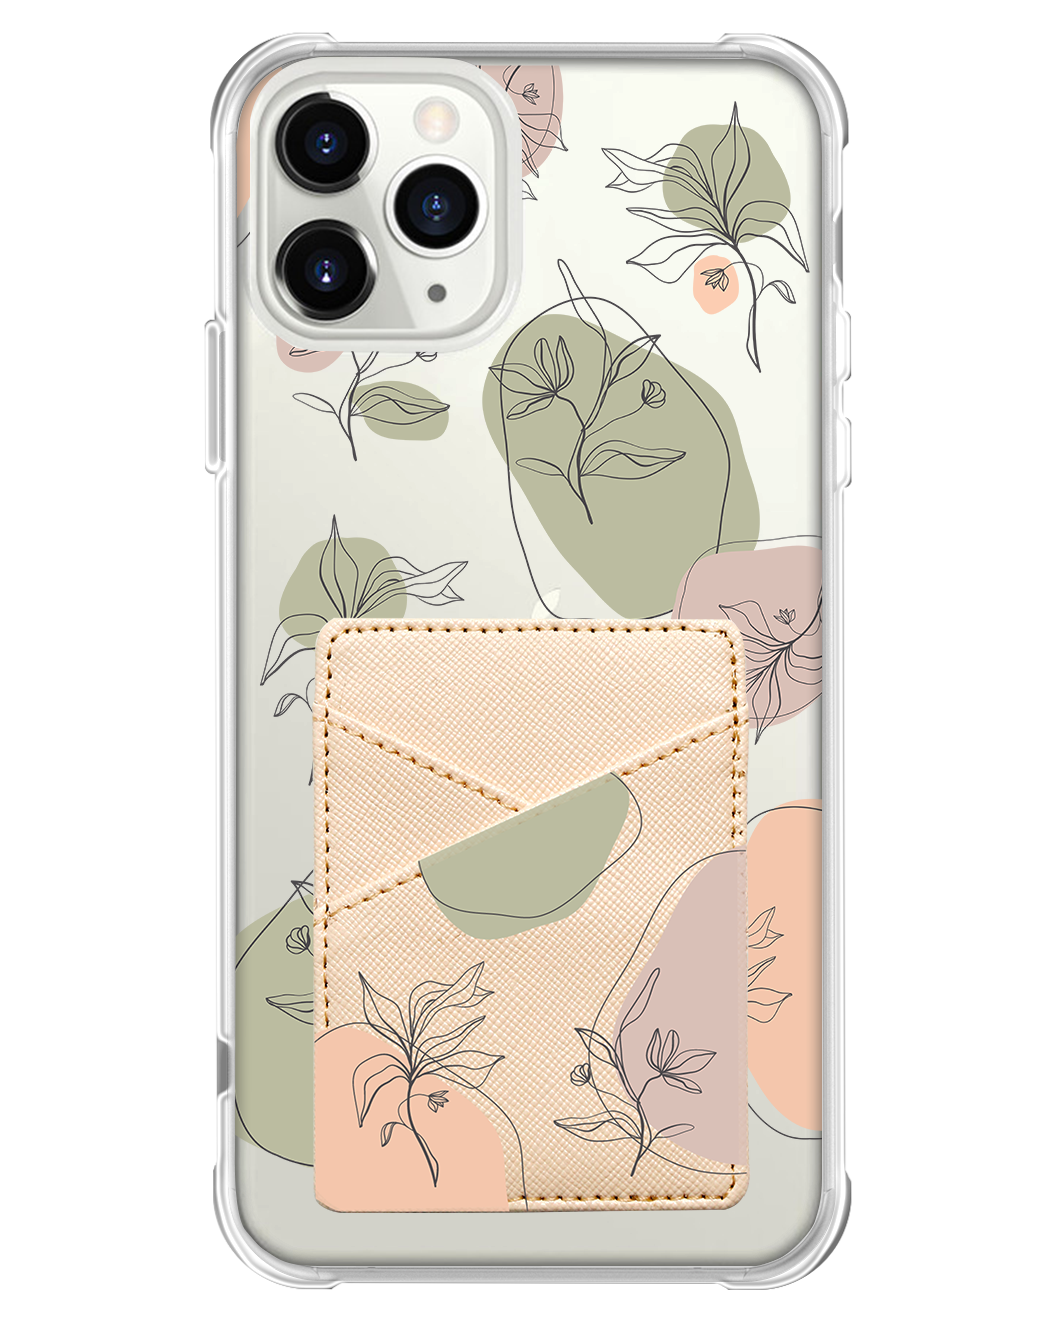 iPhone Phone Wallet Case - Sketchy Flower 1.0